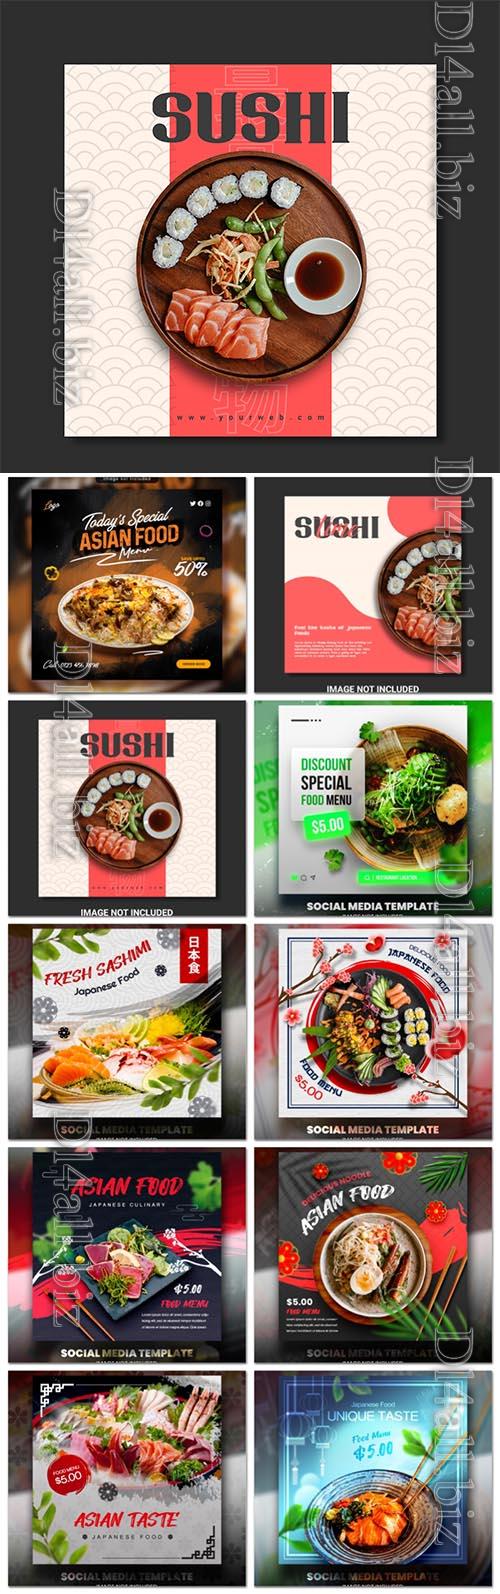 Food social media promotion psd flyer template vol 3